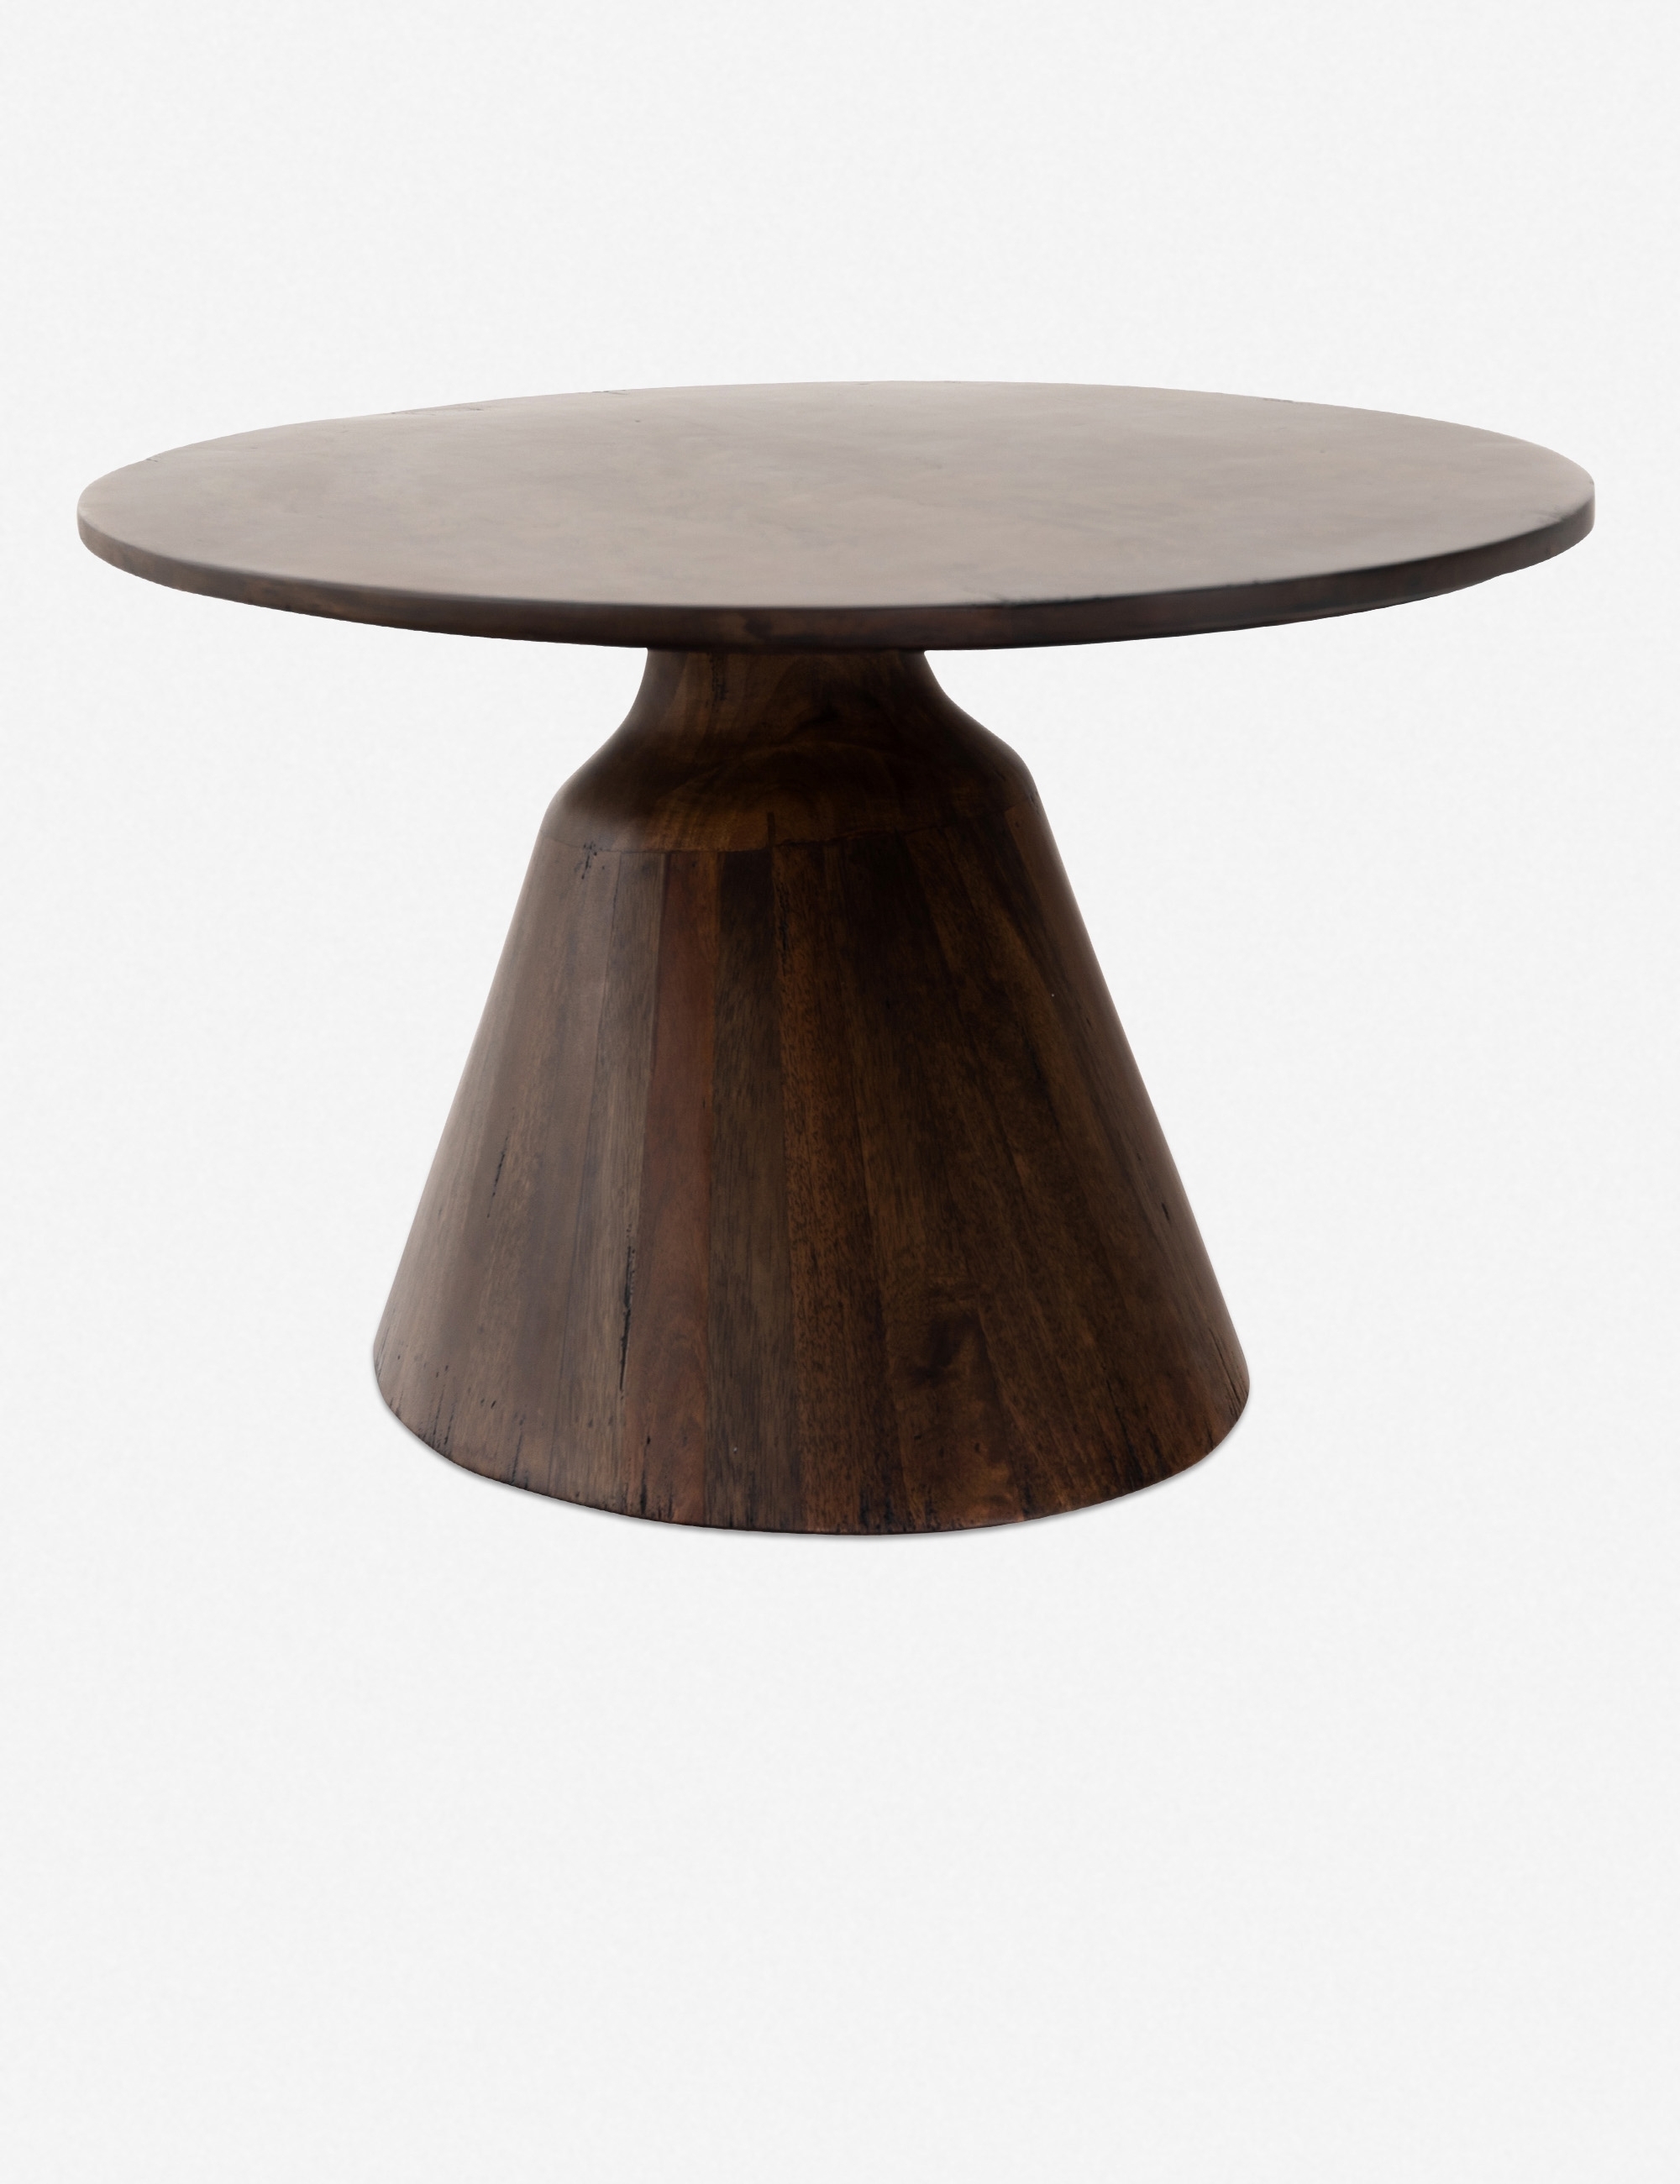 Armand Oval Coffee Table - Image 3